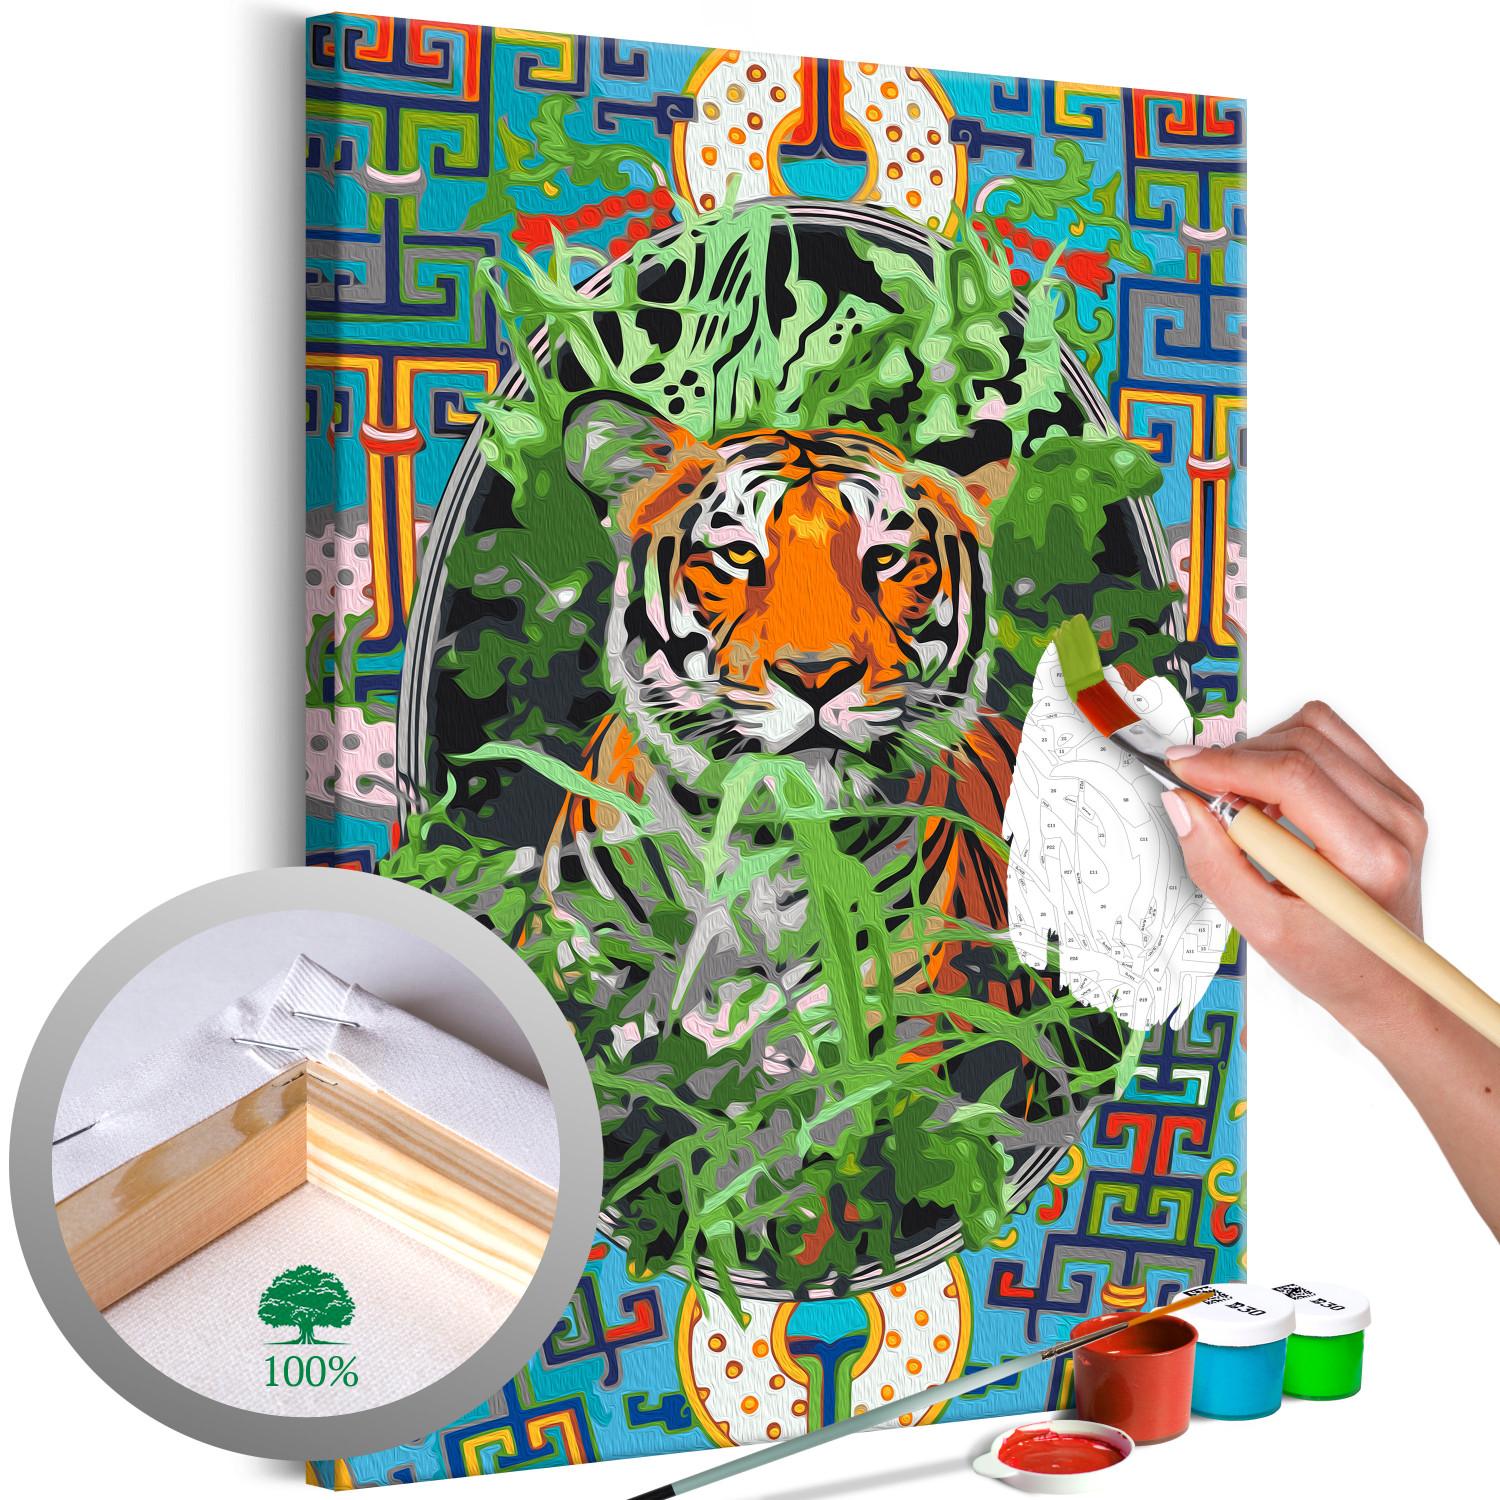 Cuadro para pintar por números Pensive Cat - Tiger among Grass and Abstract Colored Background